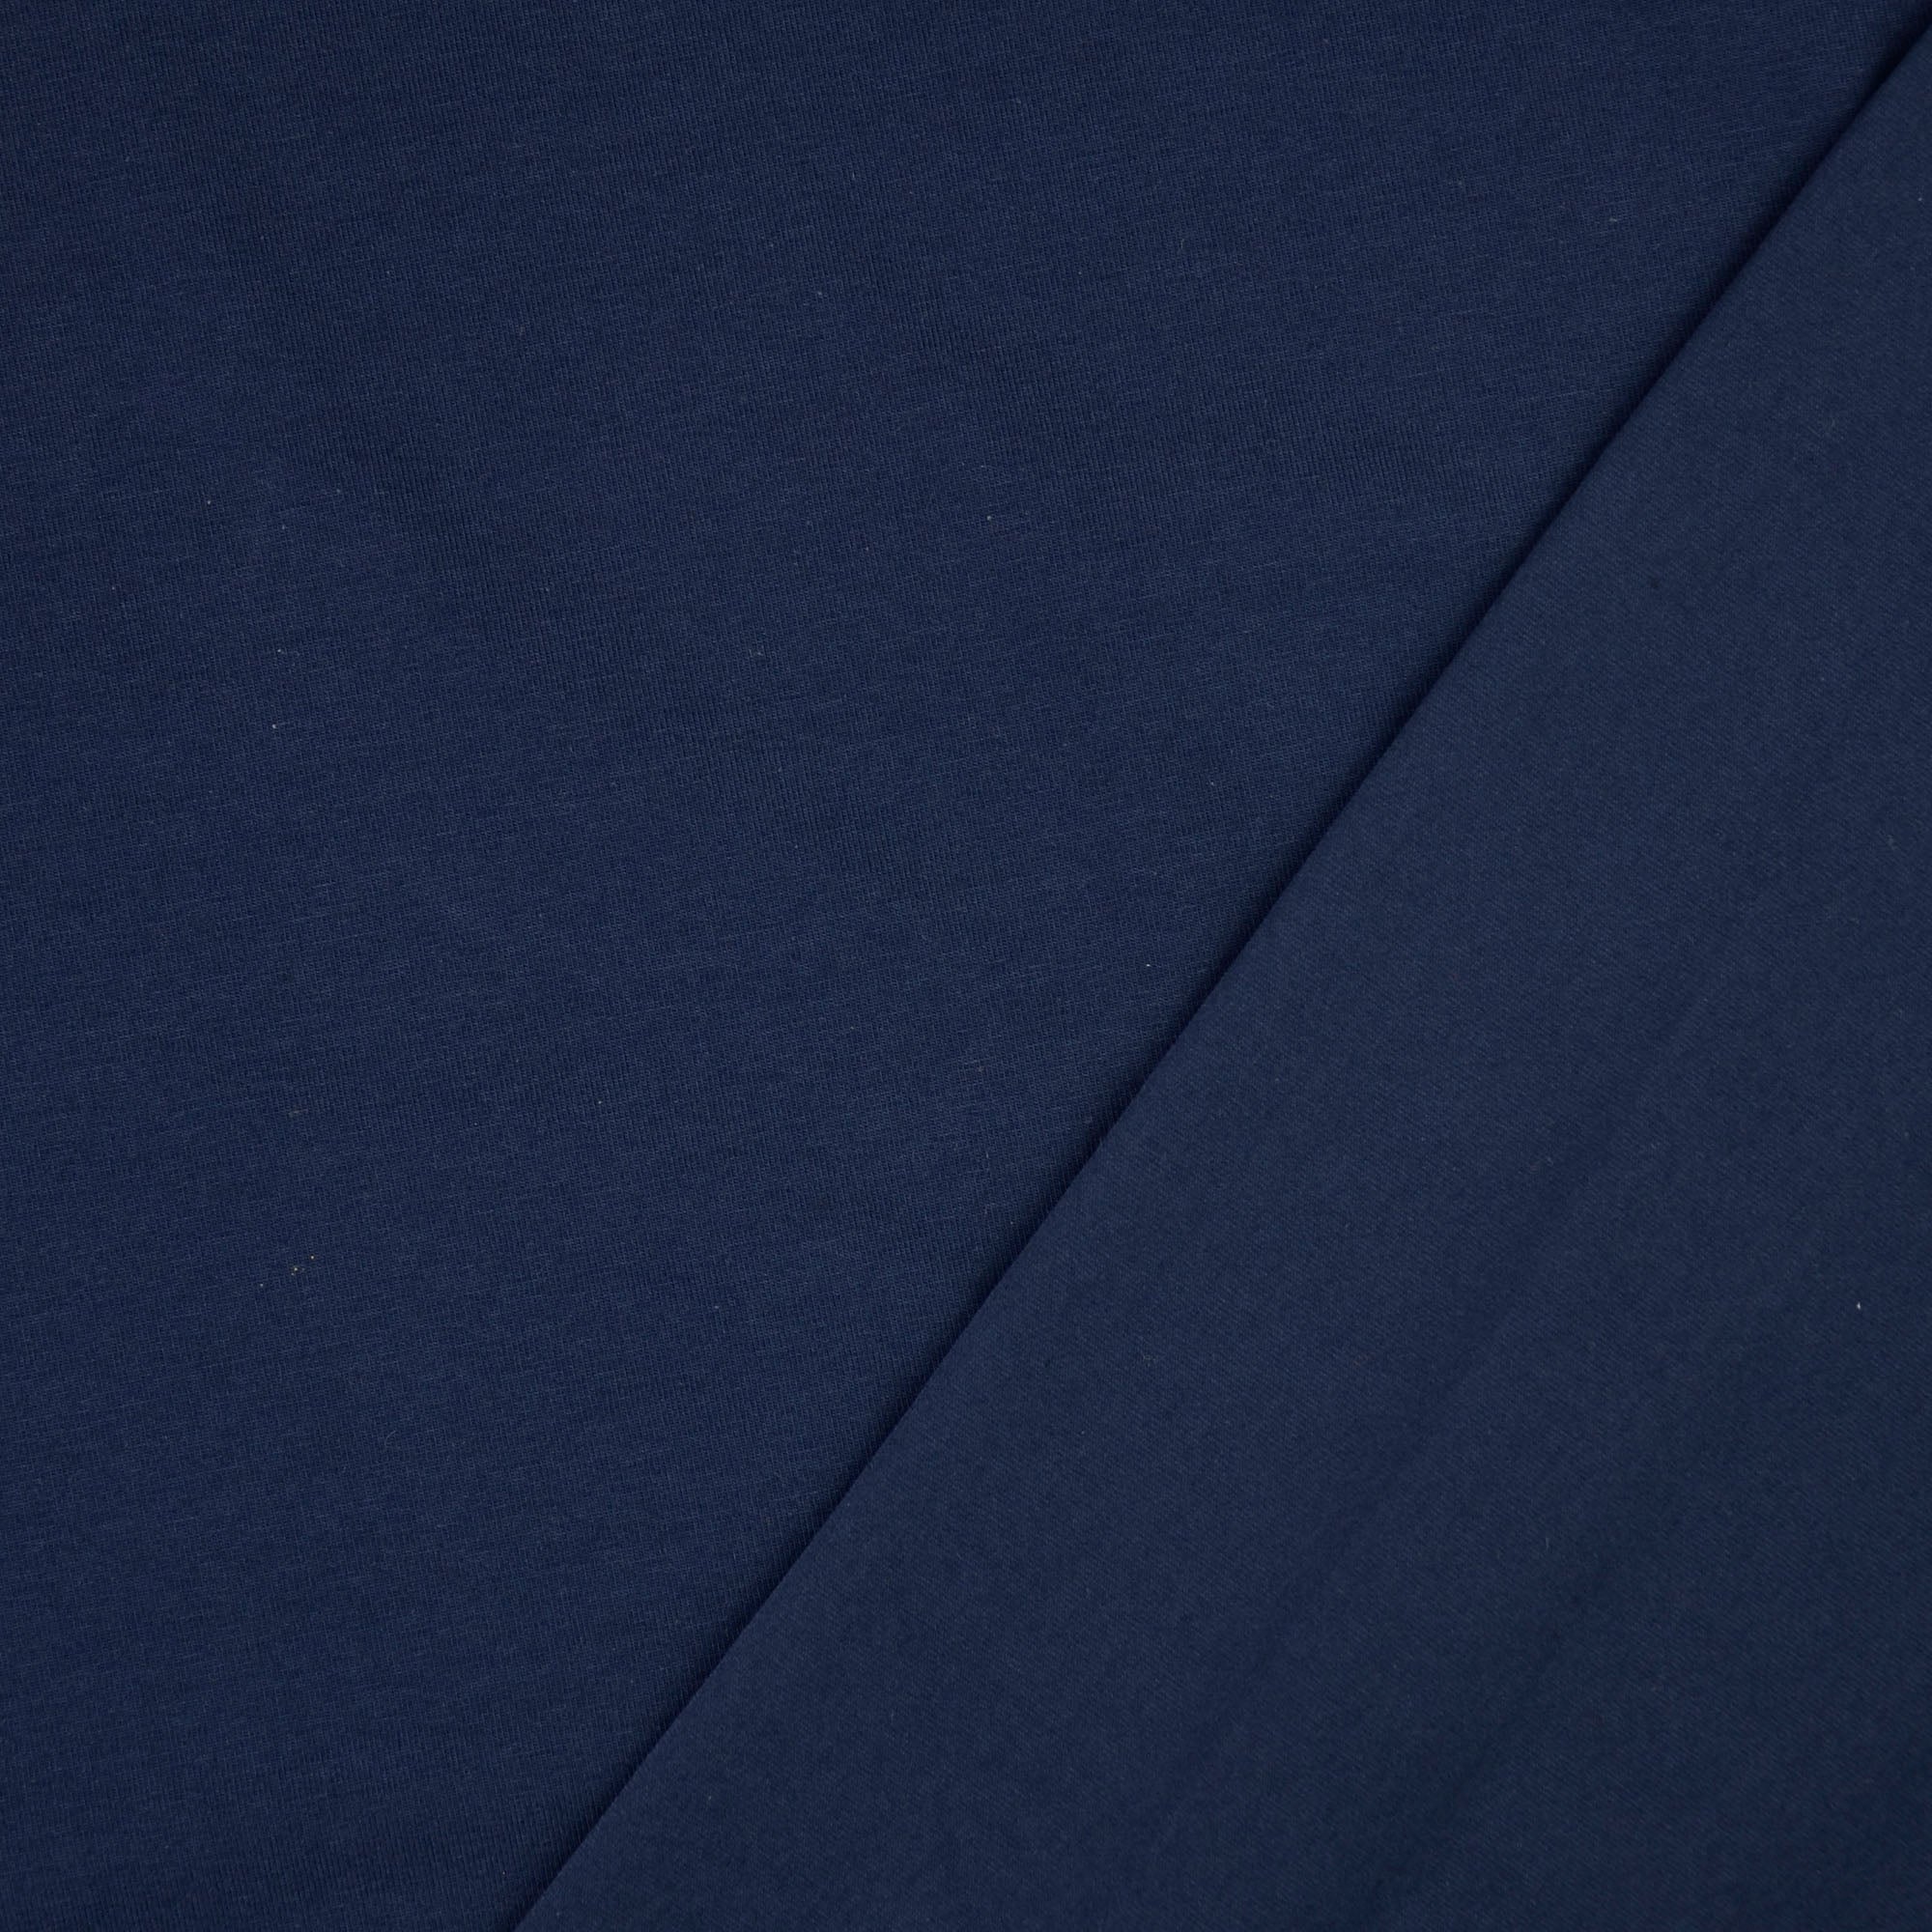 Essential Chic Navy Plain Cotton Jersey Fabric